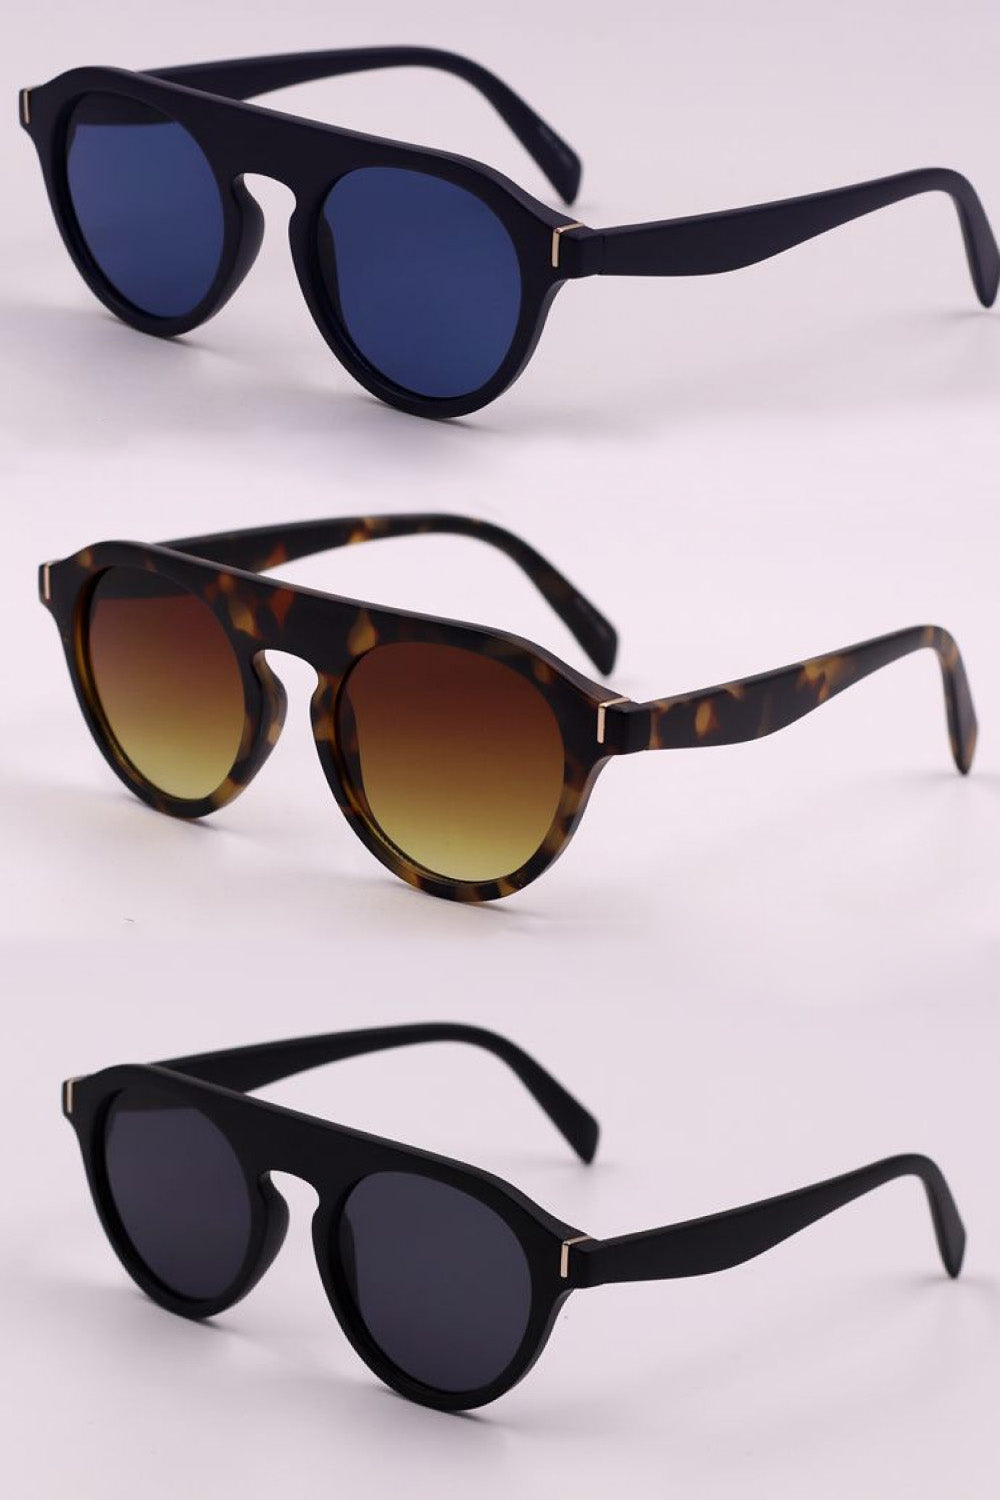 3-Piece Round Polycarbonate Full Rim Sunglasses Royal Blue/Camel/Dusty Blue One Size Sunglasses by Vim&Vigor | Vim&Vigor Boutique